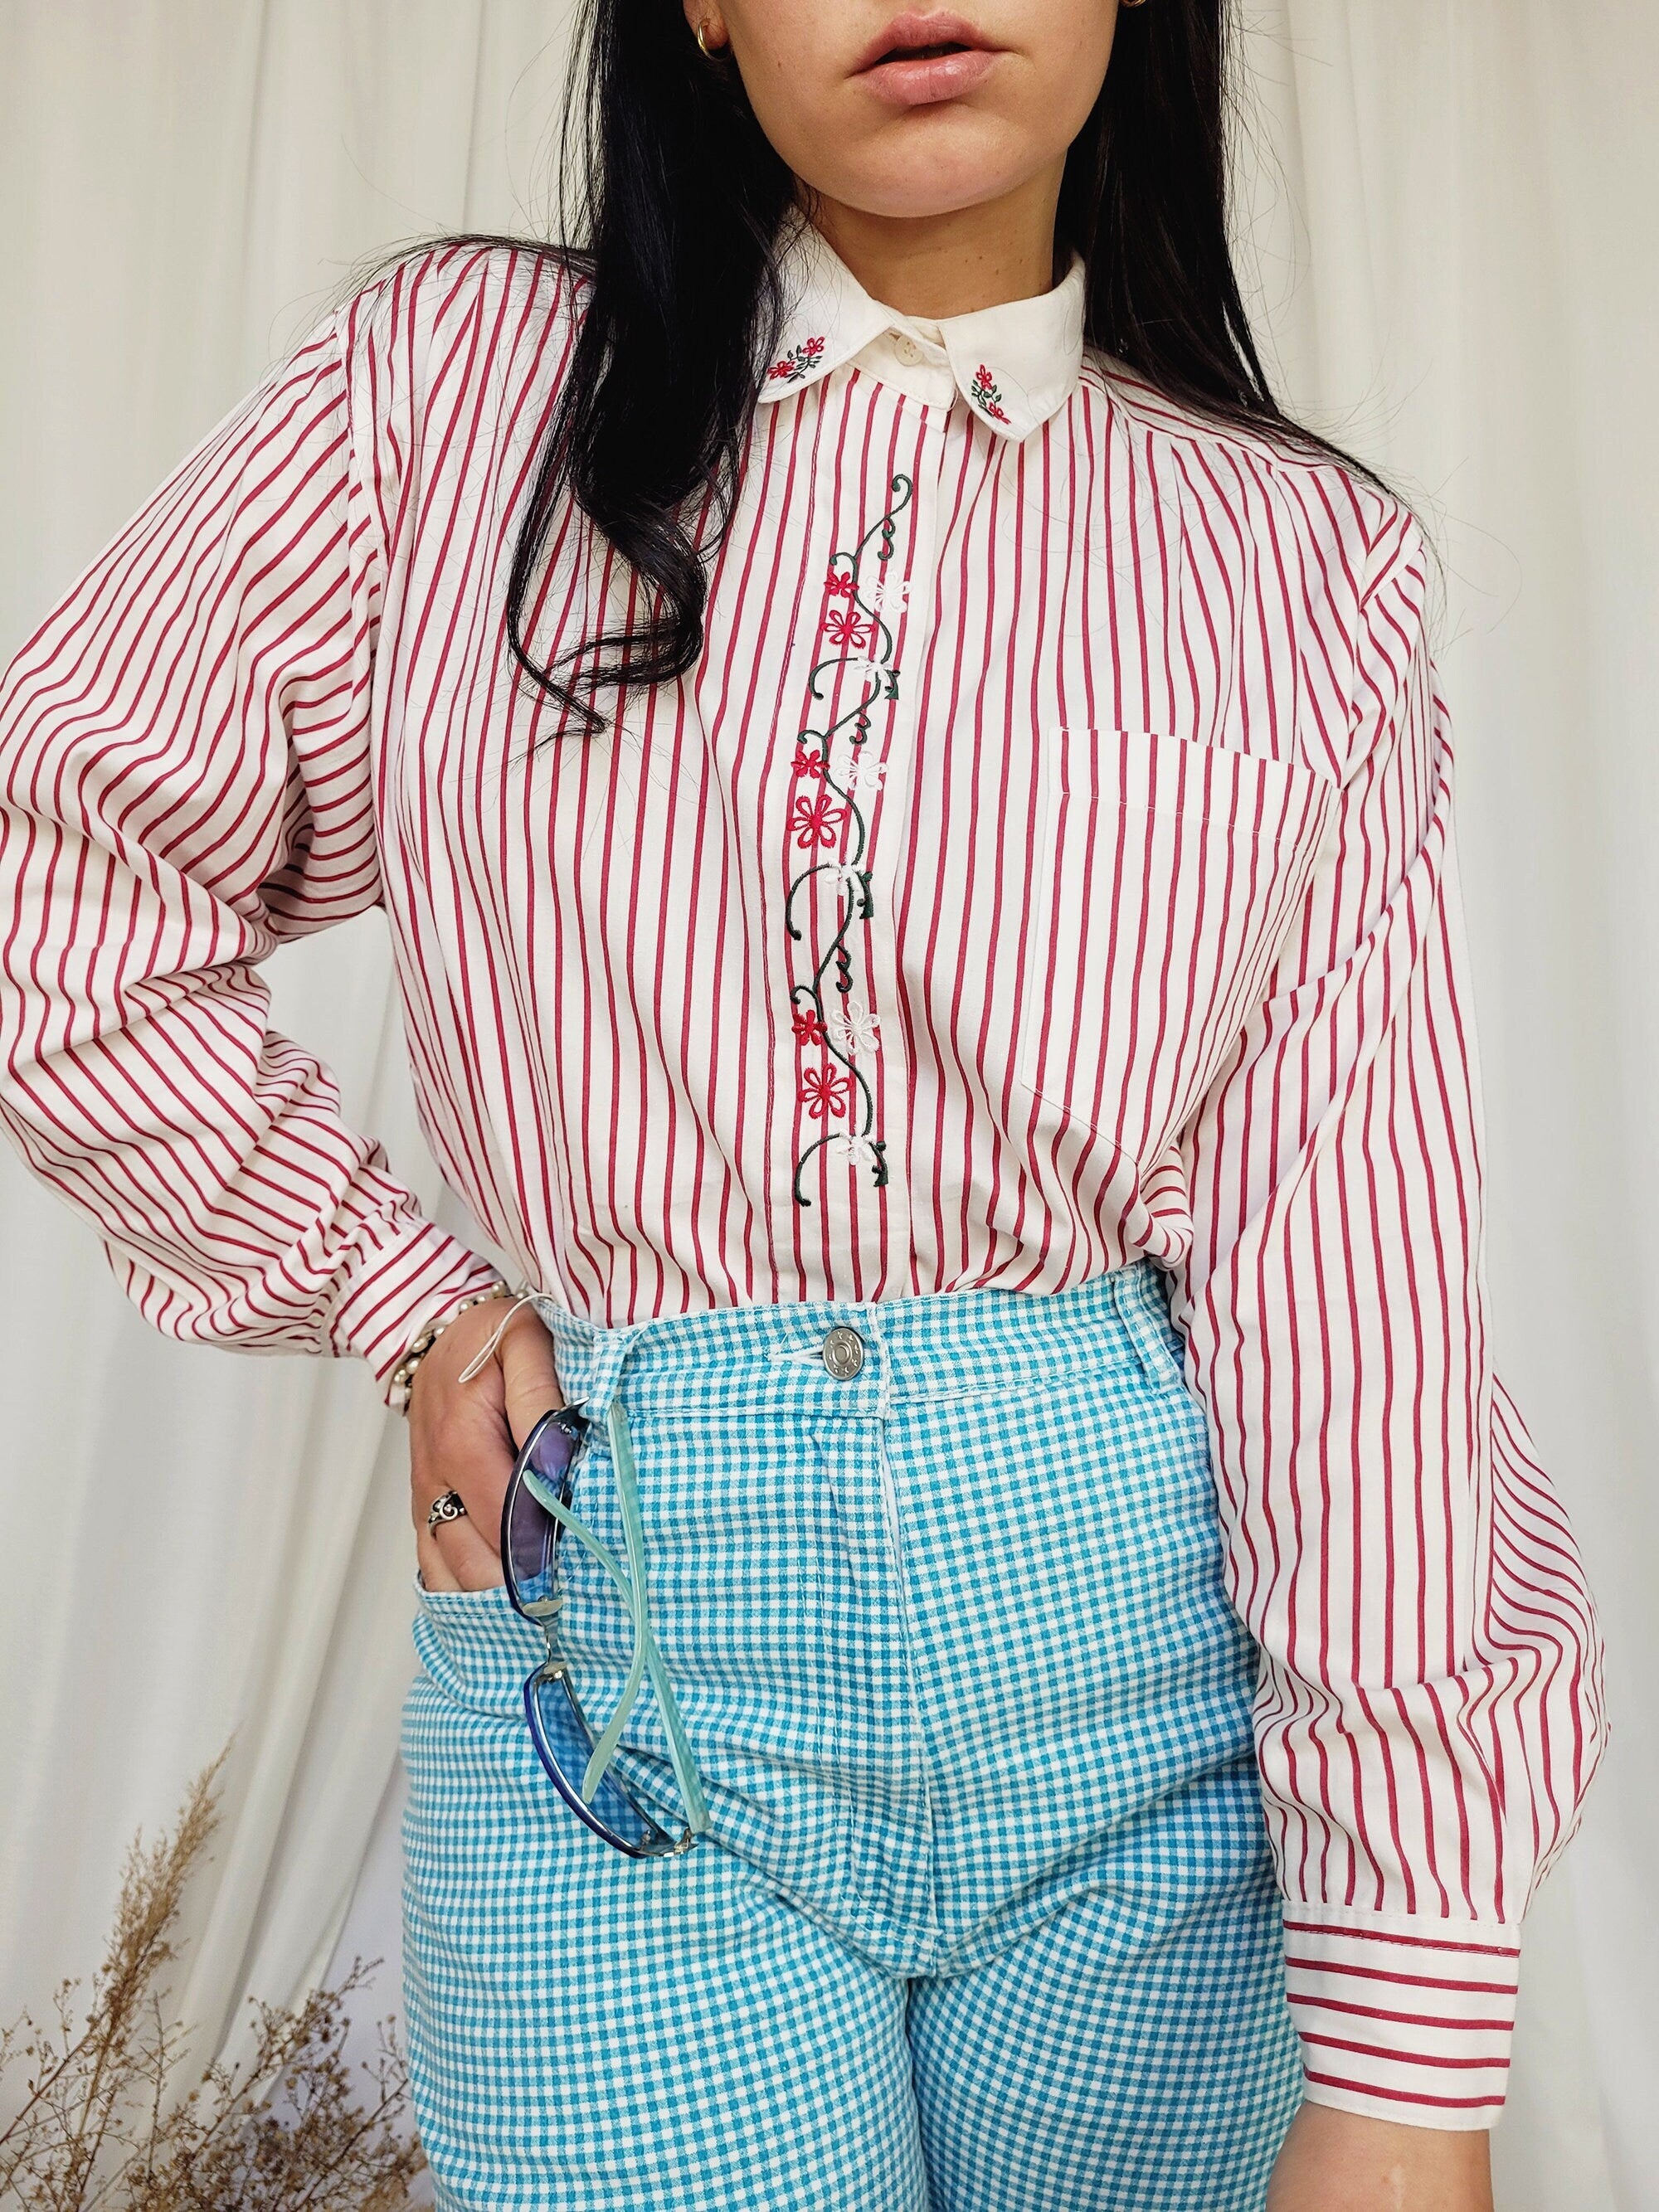 90s retro red striped embroidered minimalist cotton blouse